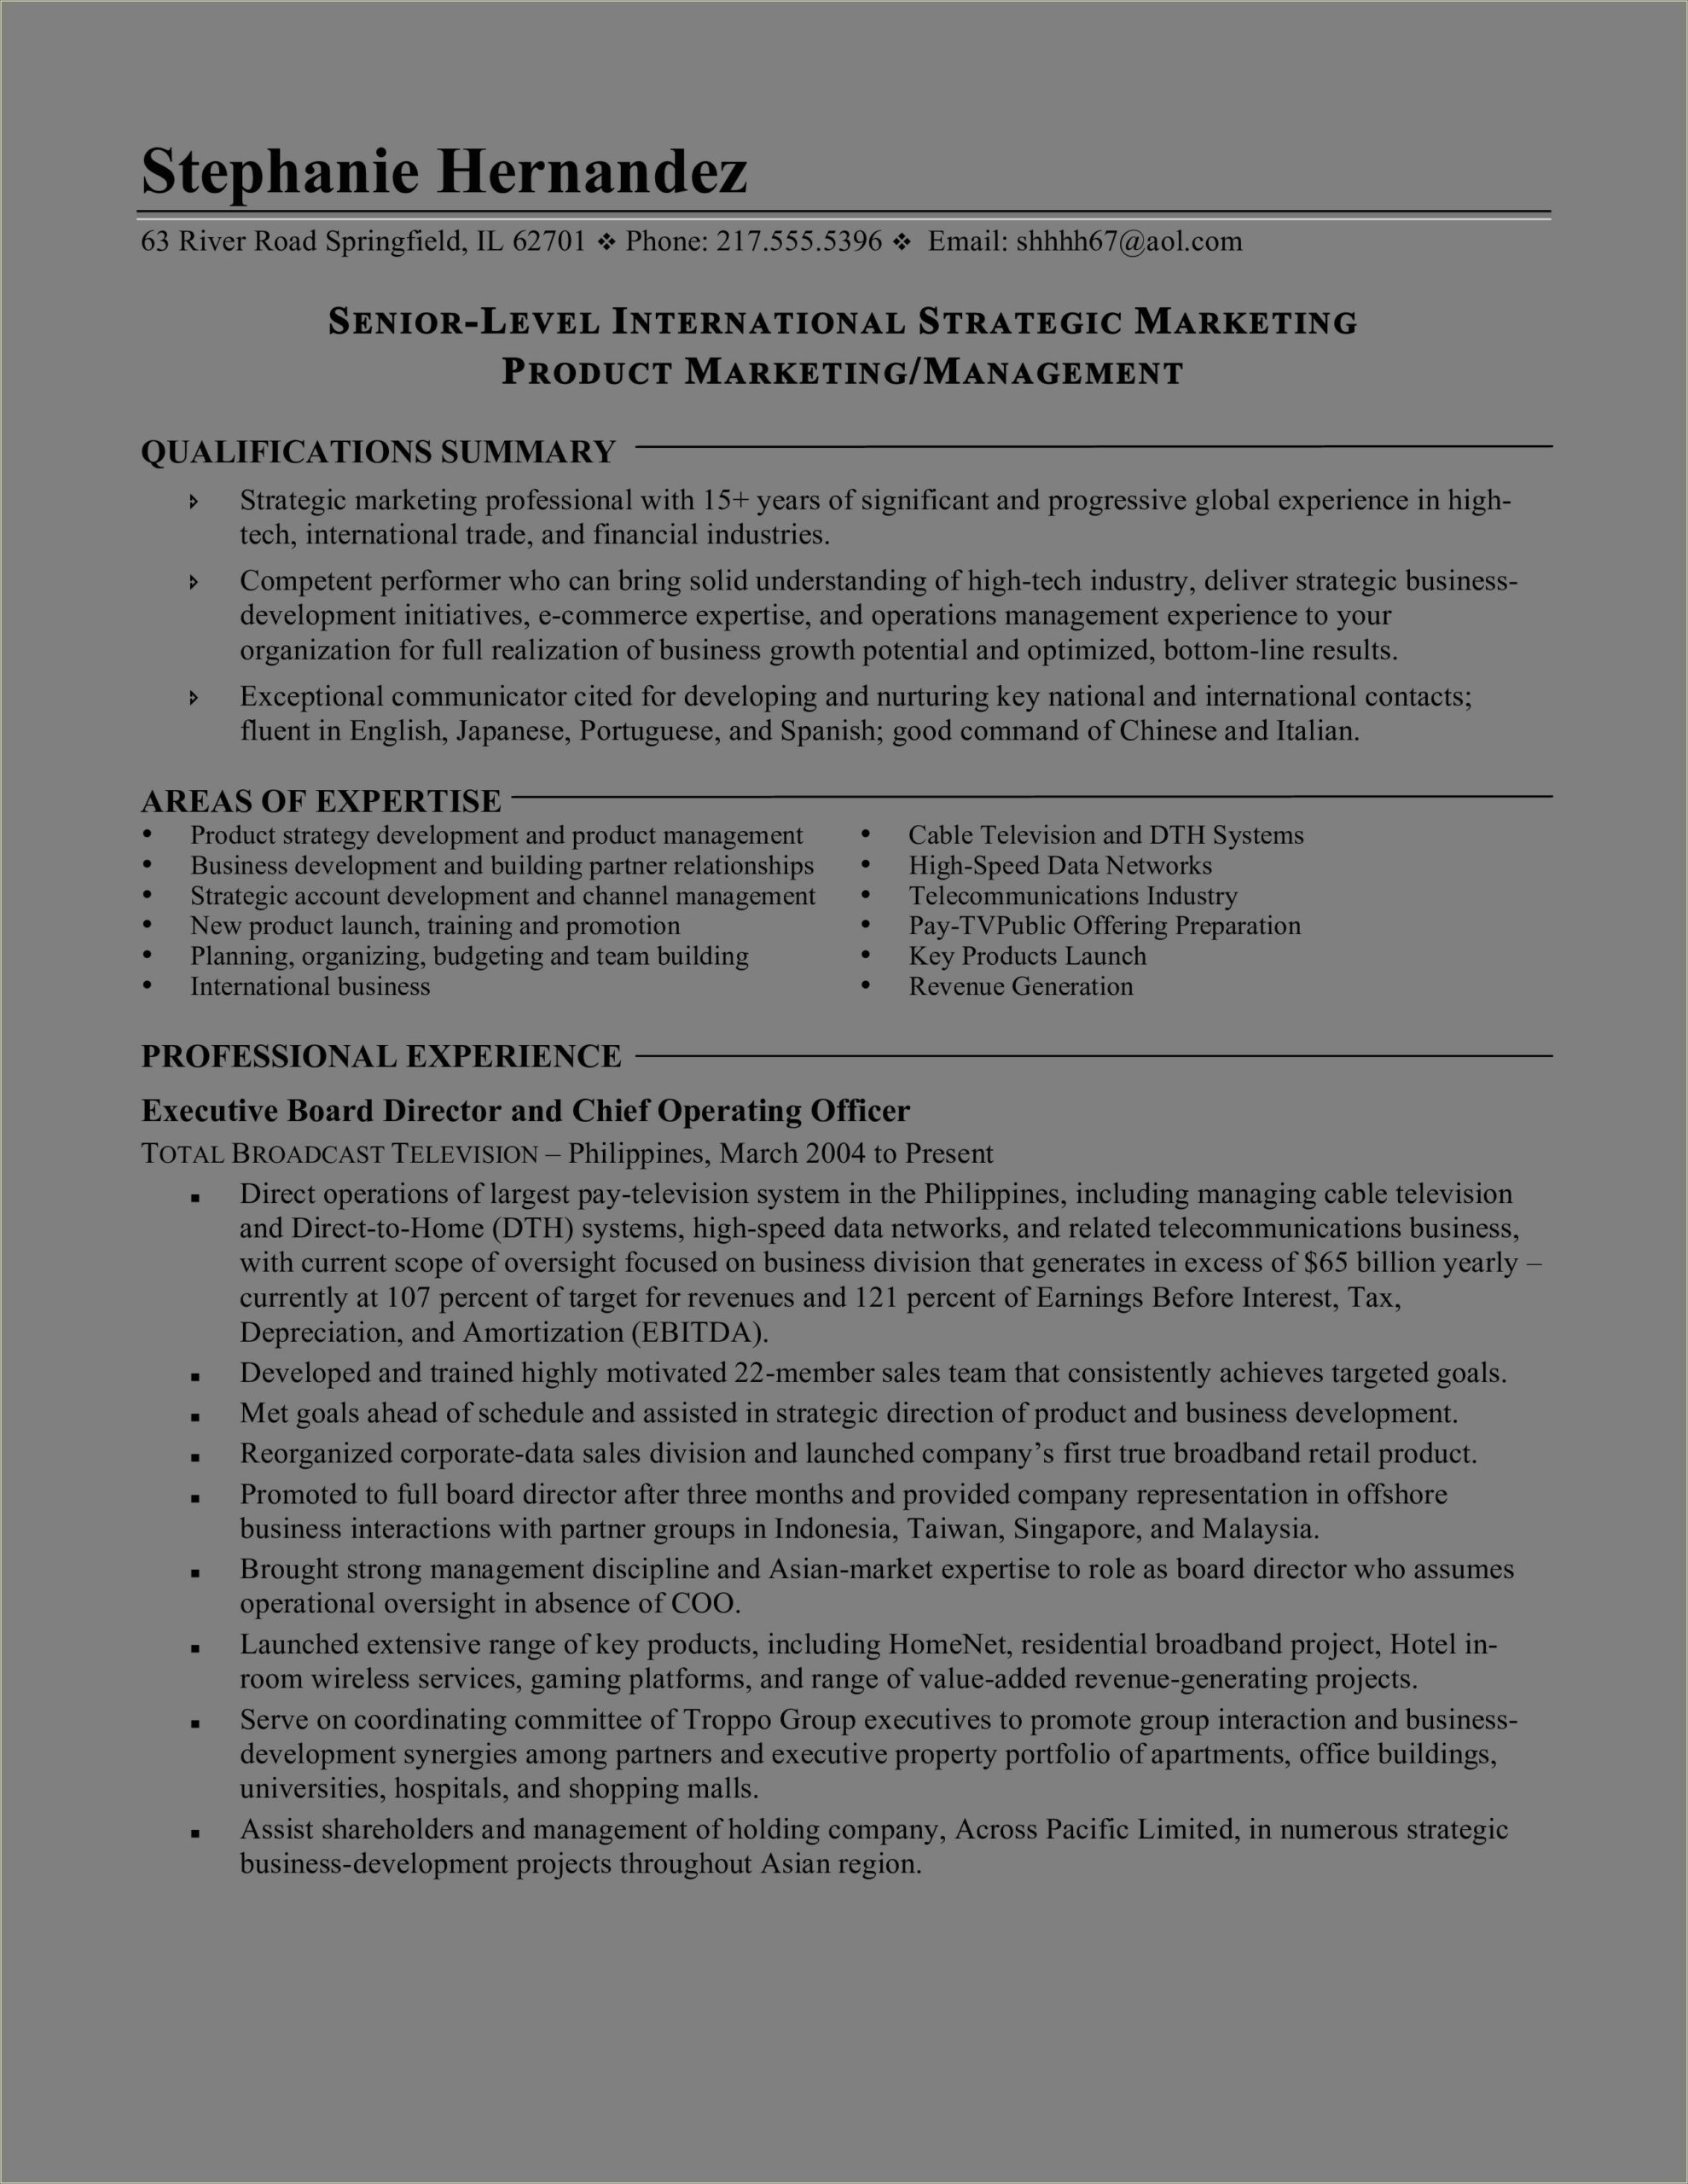 Sample Resume International Business Development Manager